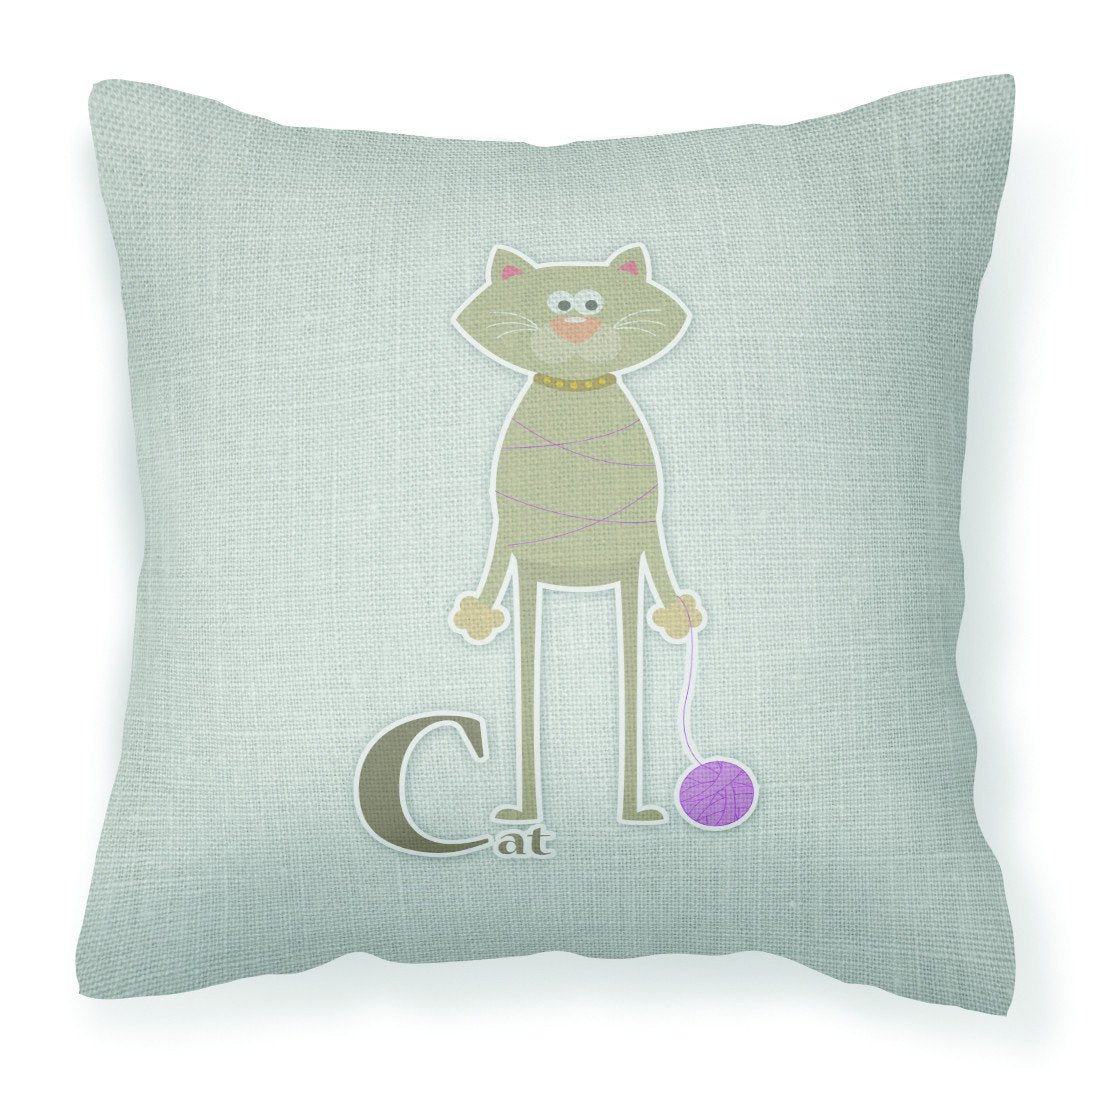 Alphabet C for Cat Fabric Decorative Pillow BB5728PW1818 by Caroline's Treasures